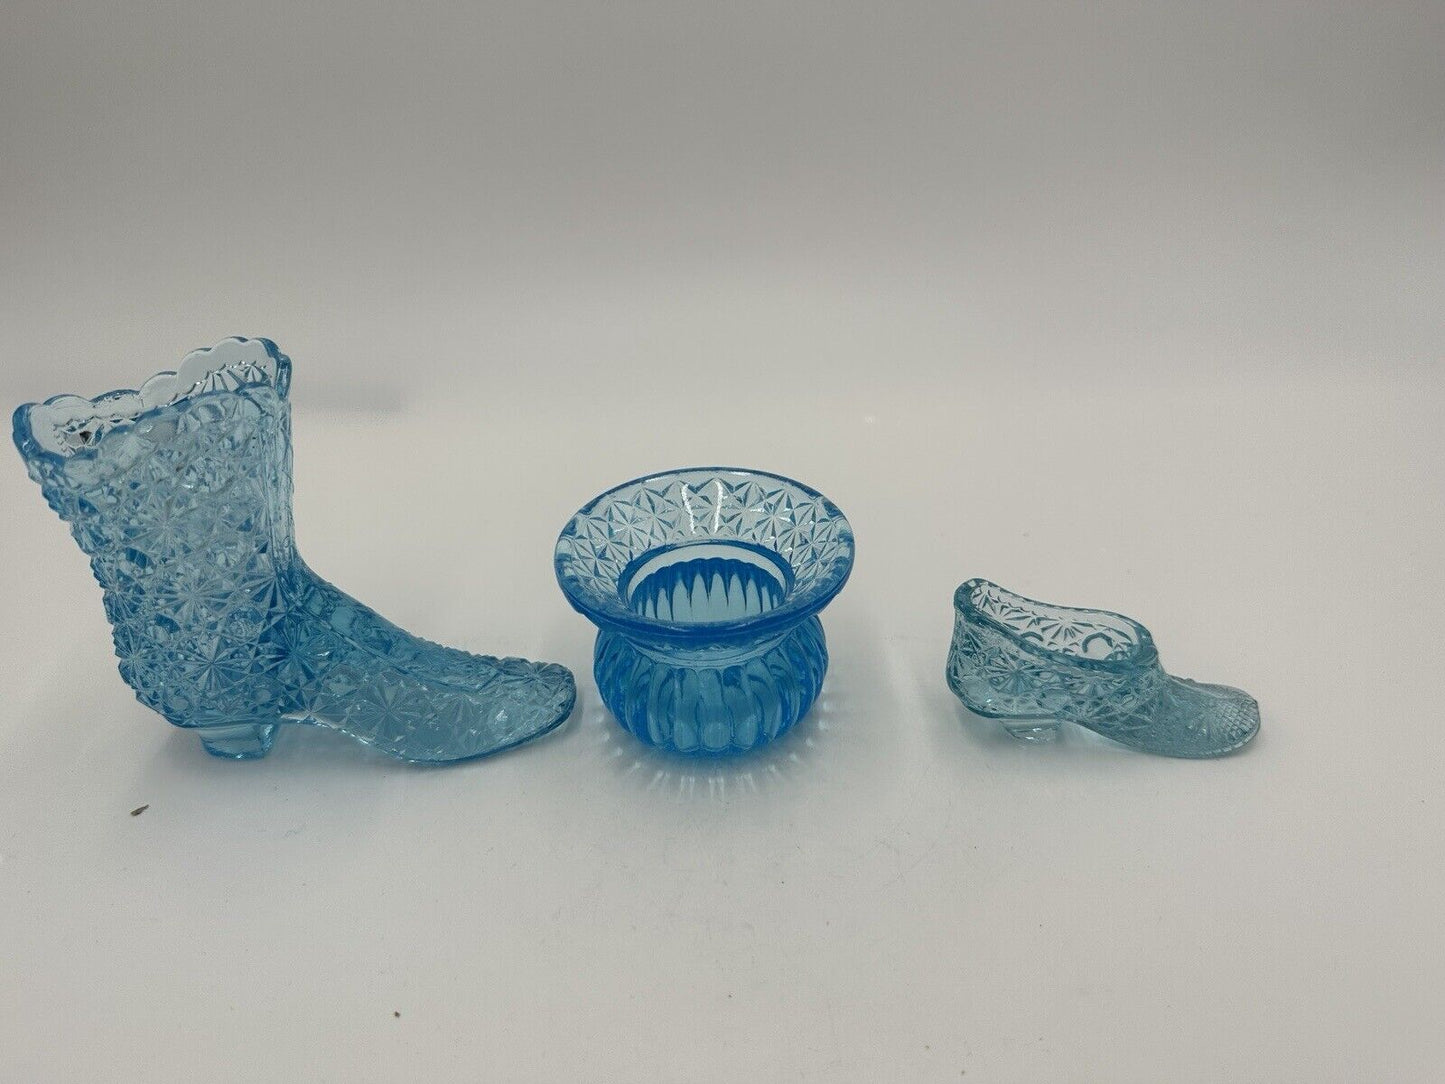 Fenton Glass Slippers Victorian Shoes Mini Vase Ser Vintage Aqua Blue Art